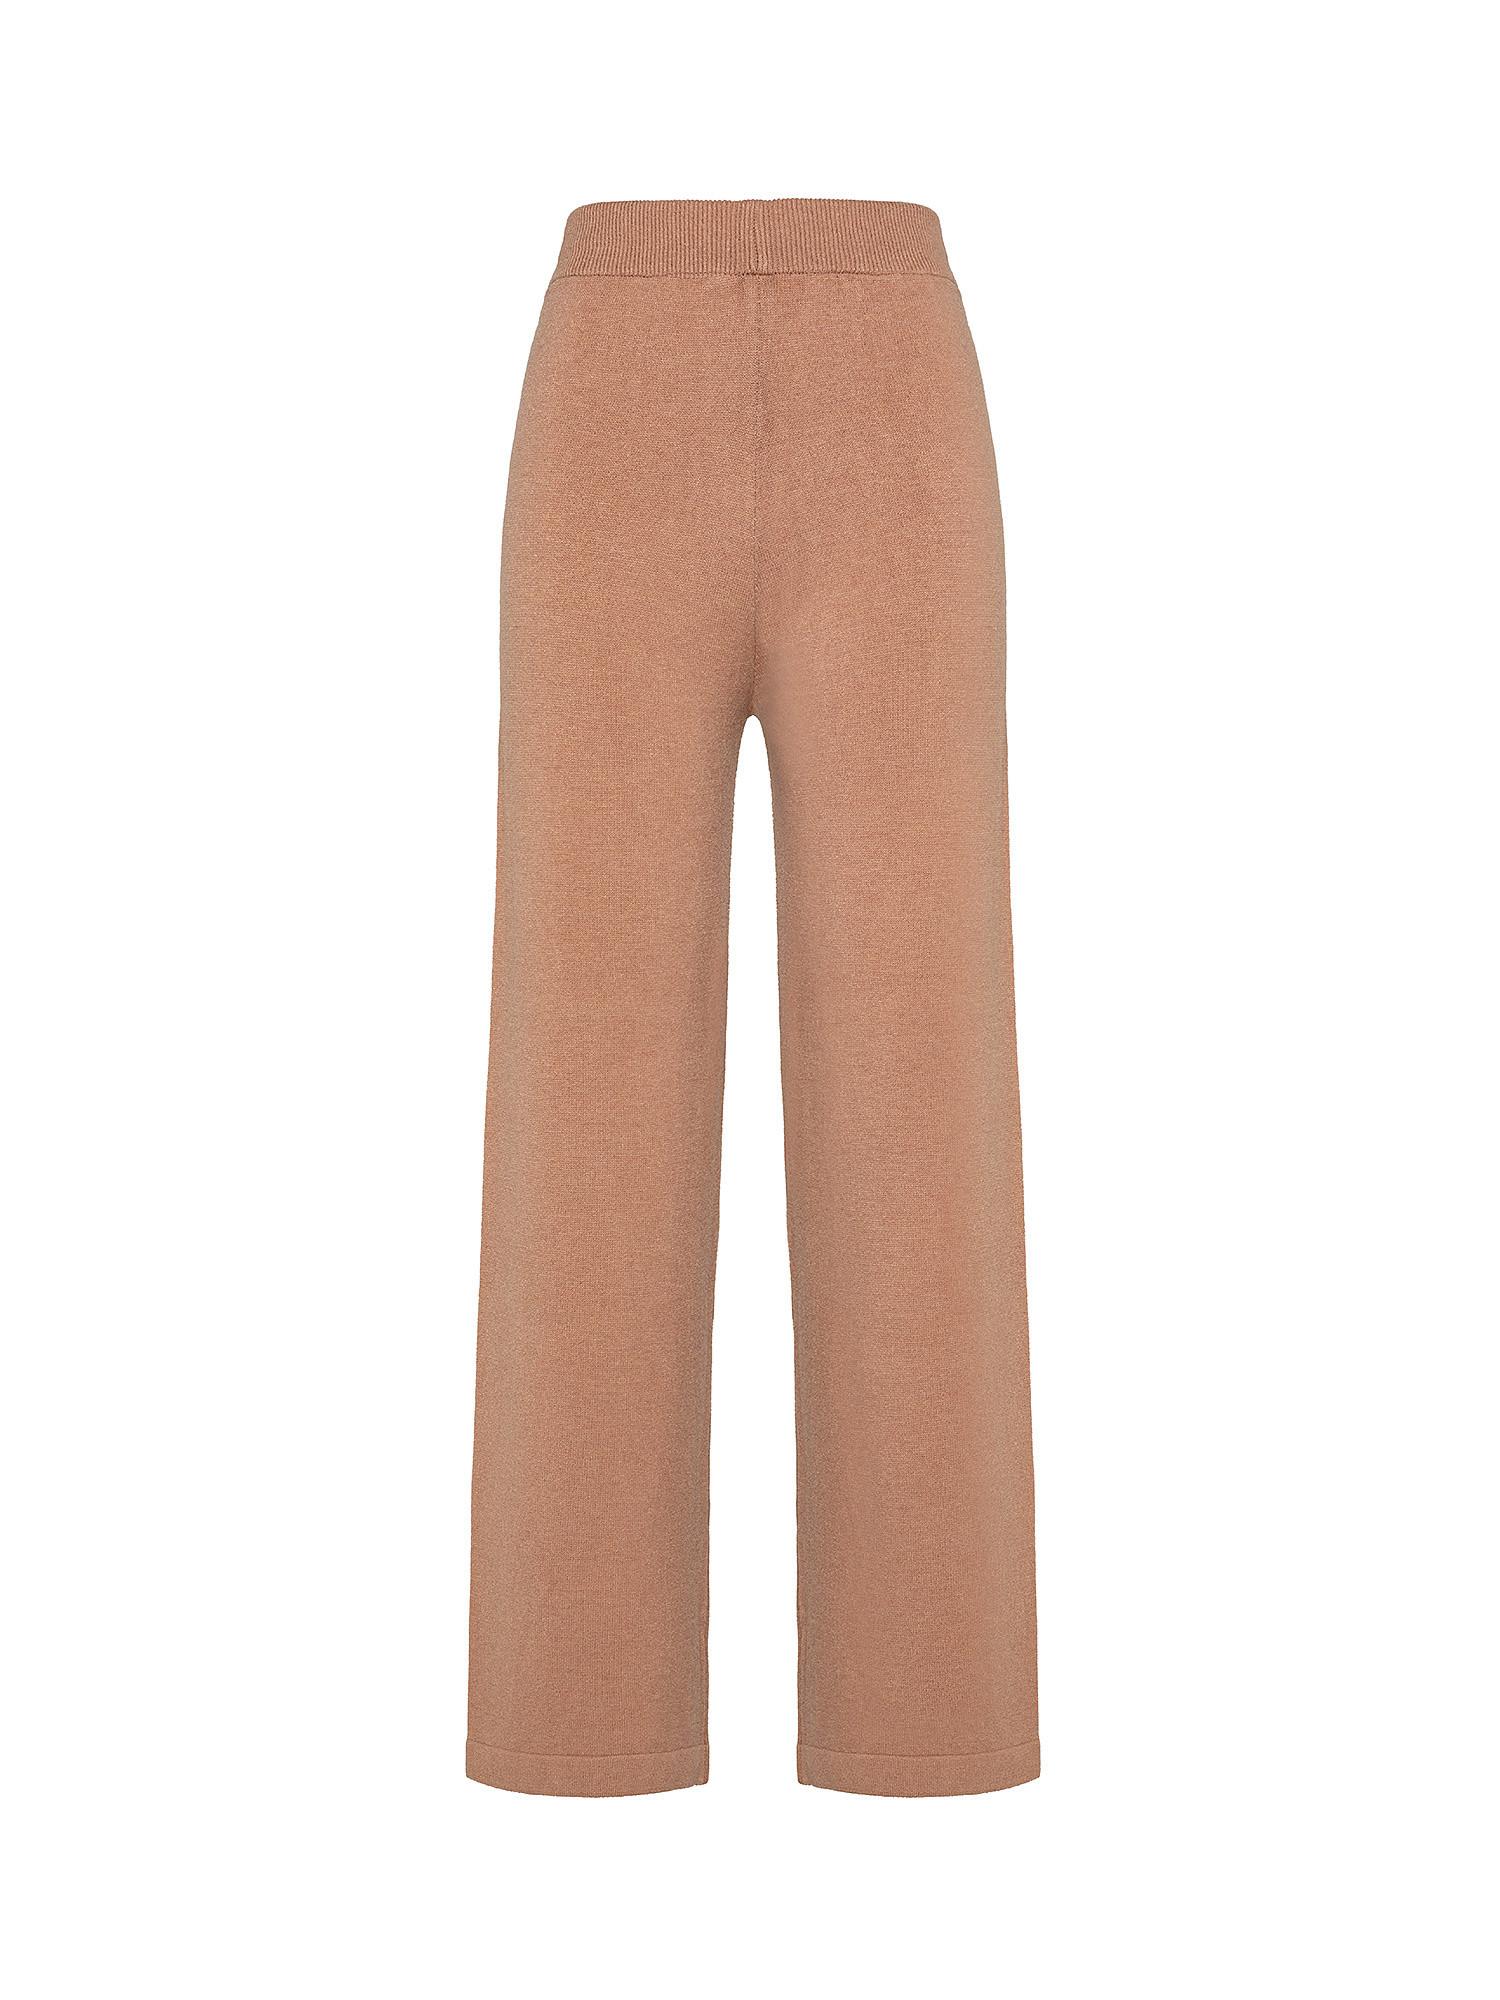 Pantalone in maglia a gamba larga, Cammello, large image number 0